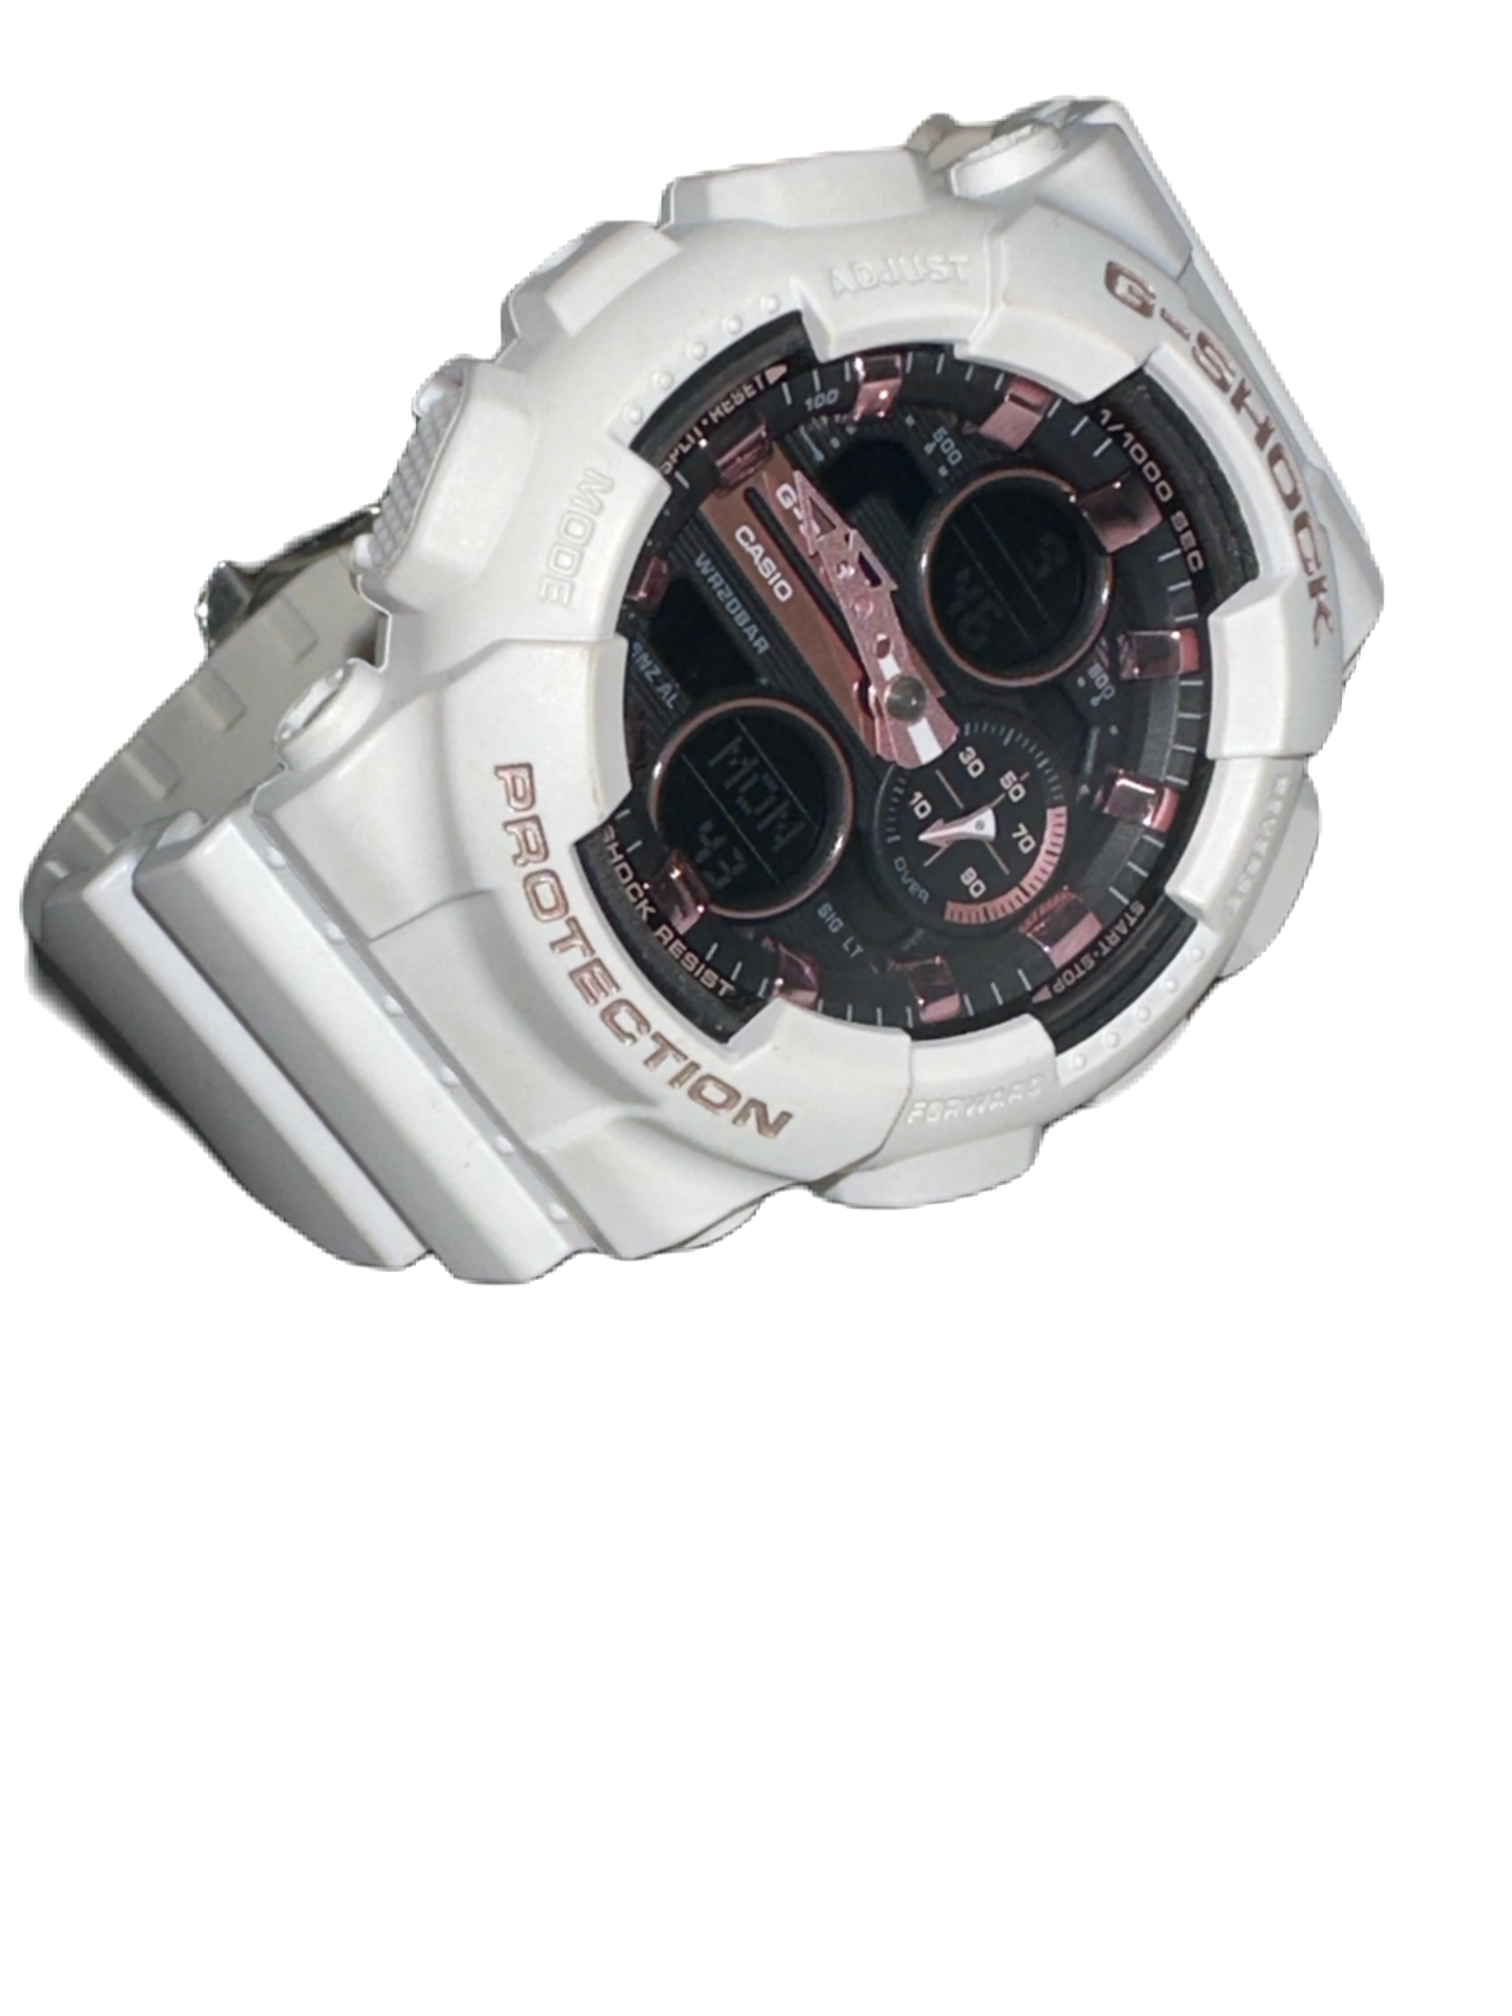 Casio G-Shock Watch with Plastic Strap GMA-S140M-7AER - Purple/White